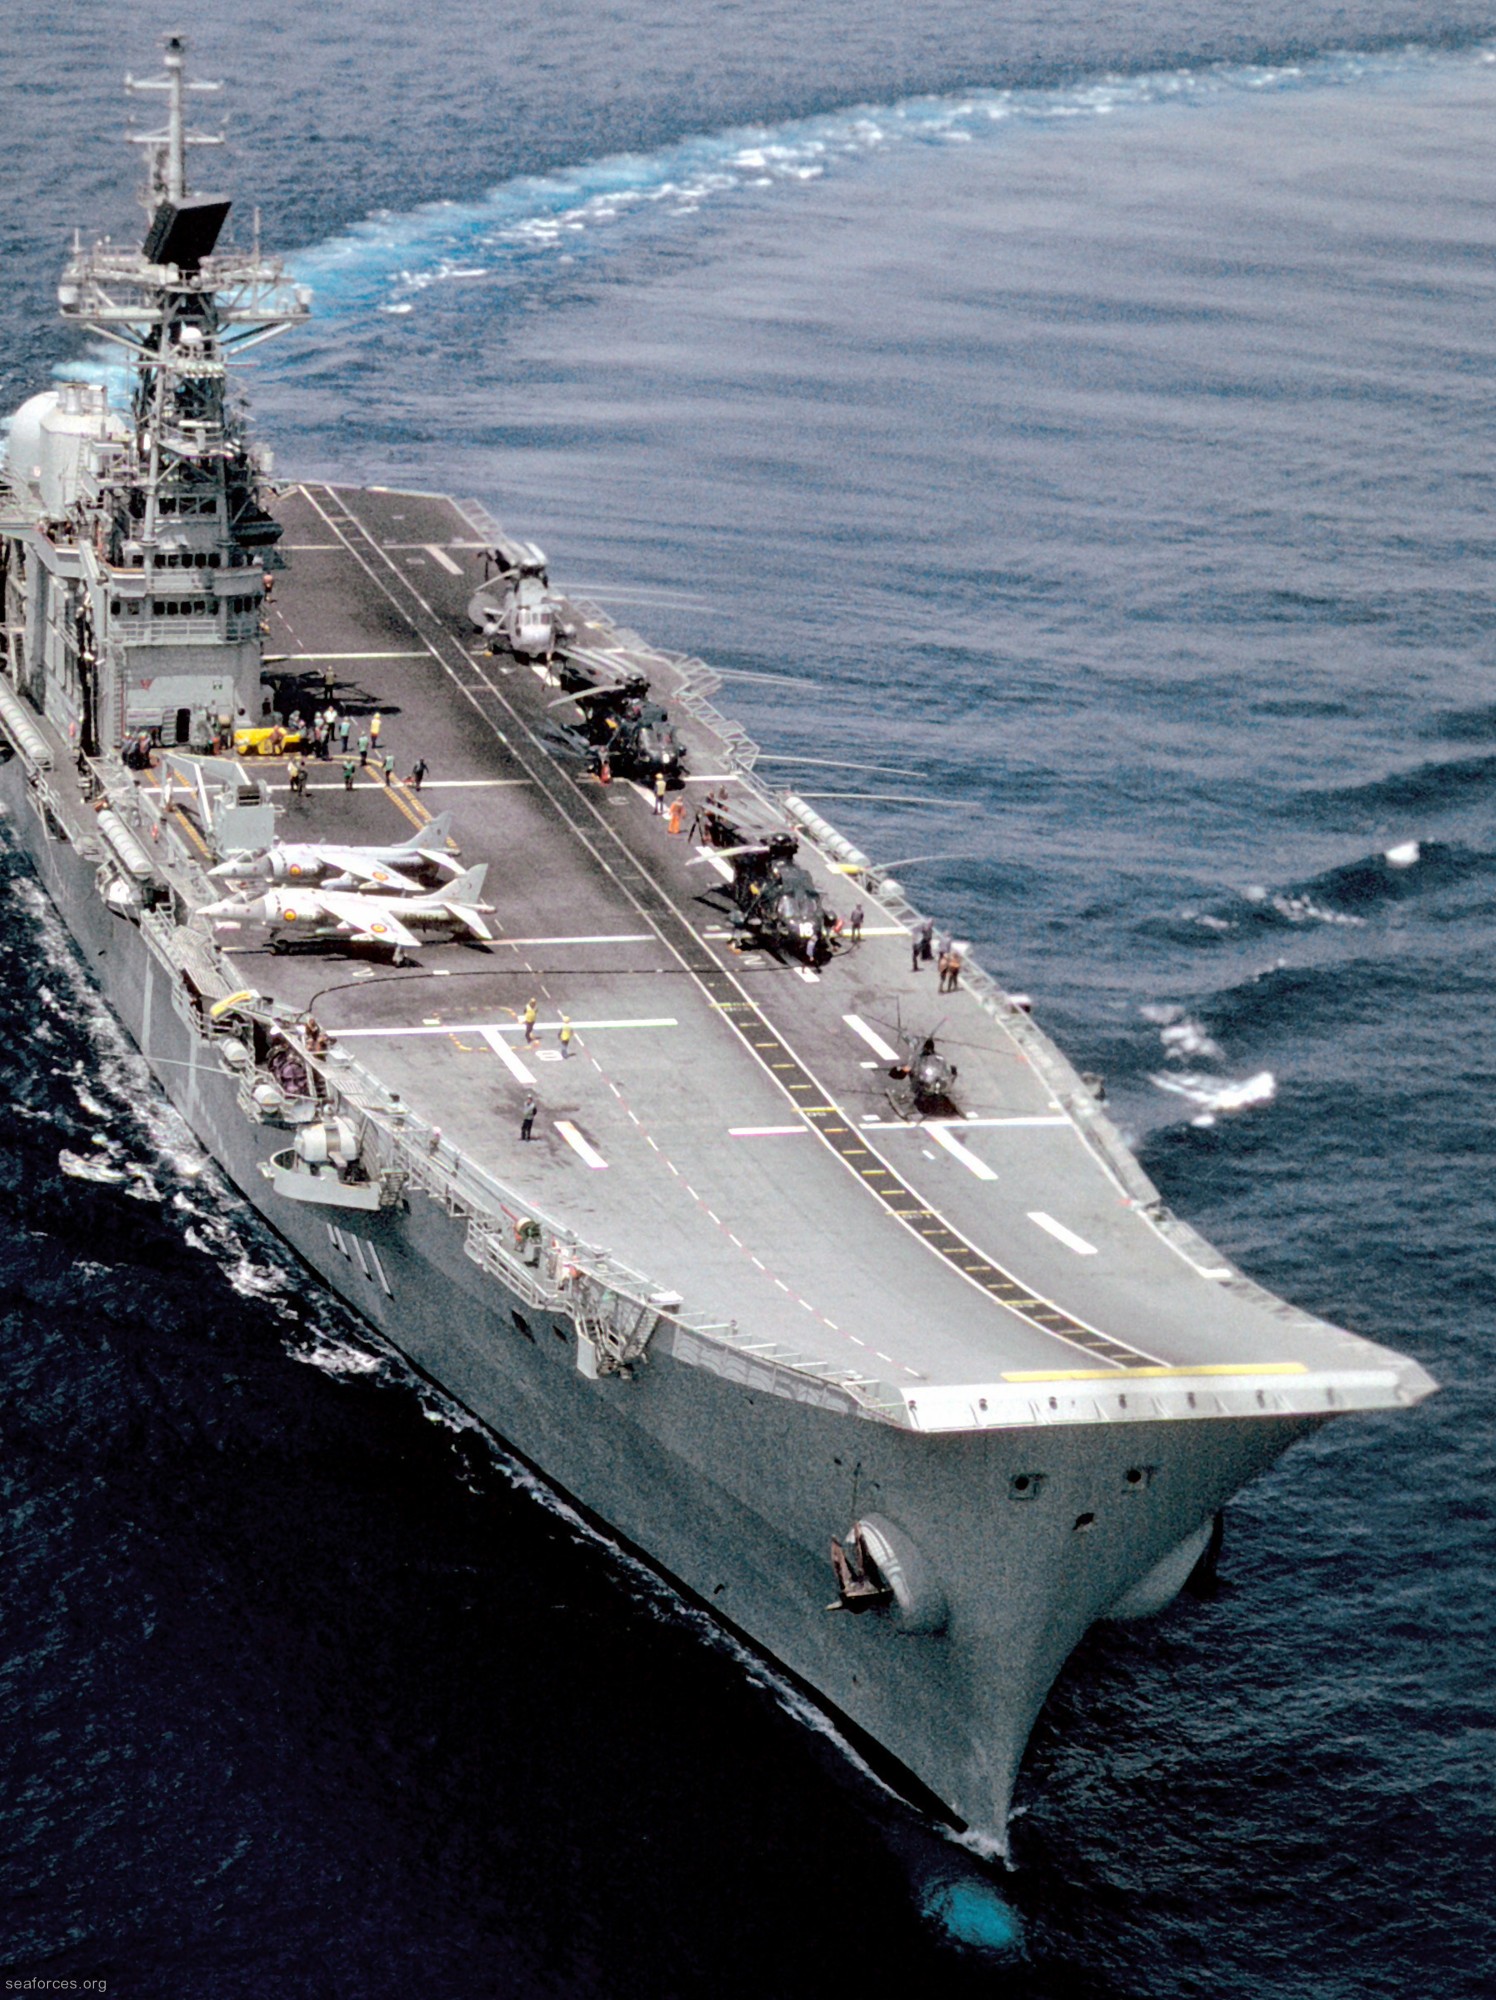 r-11 sps principe de asturias aircraft carrier vstol spanish navy 09